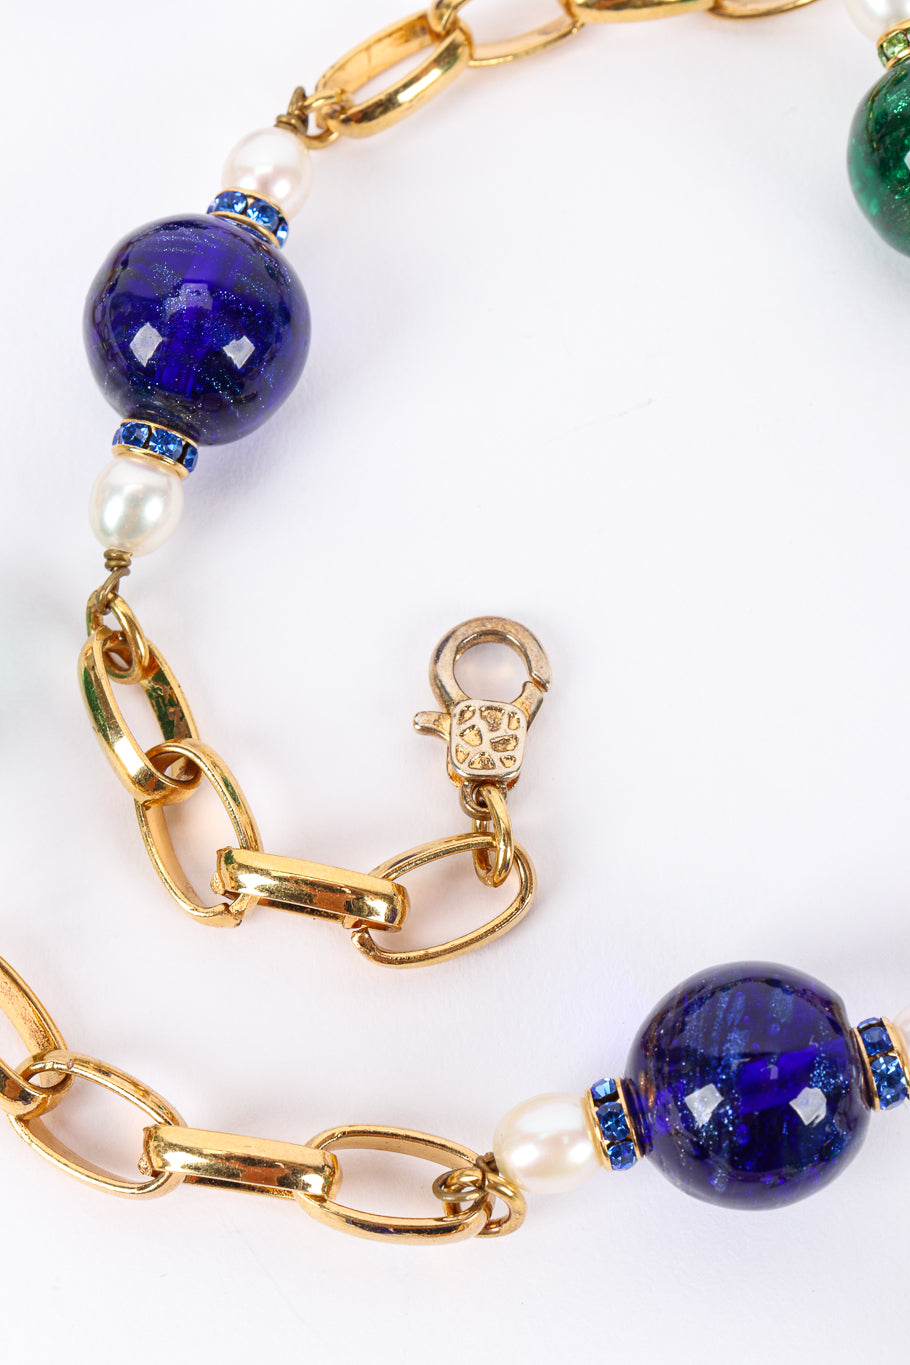 Vintage Gripoix Pearl and Glass Bead Necklace clasp closeup @Recessla